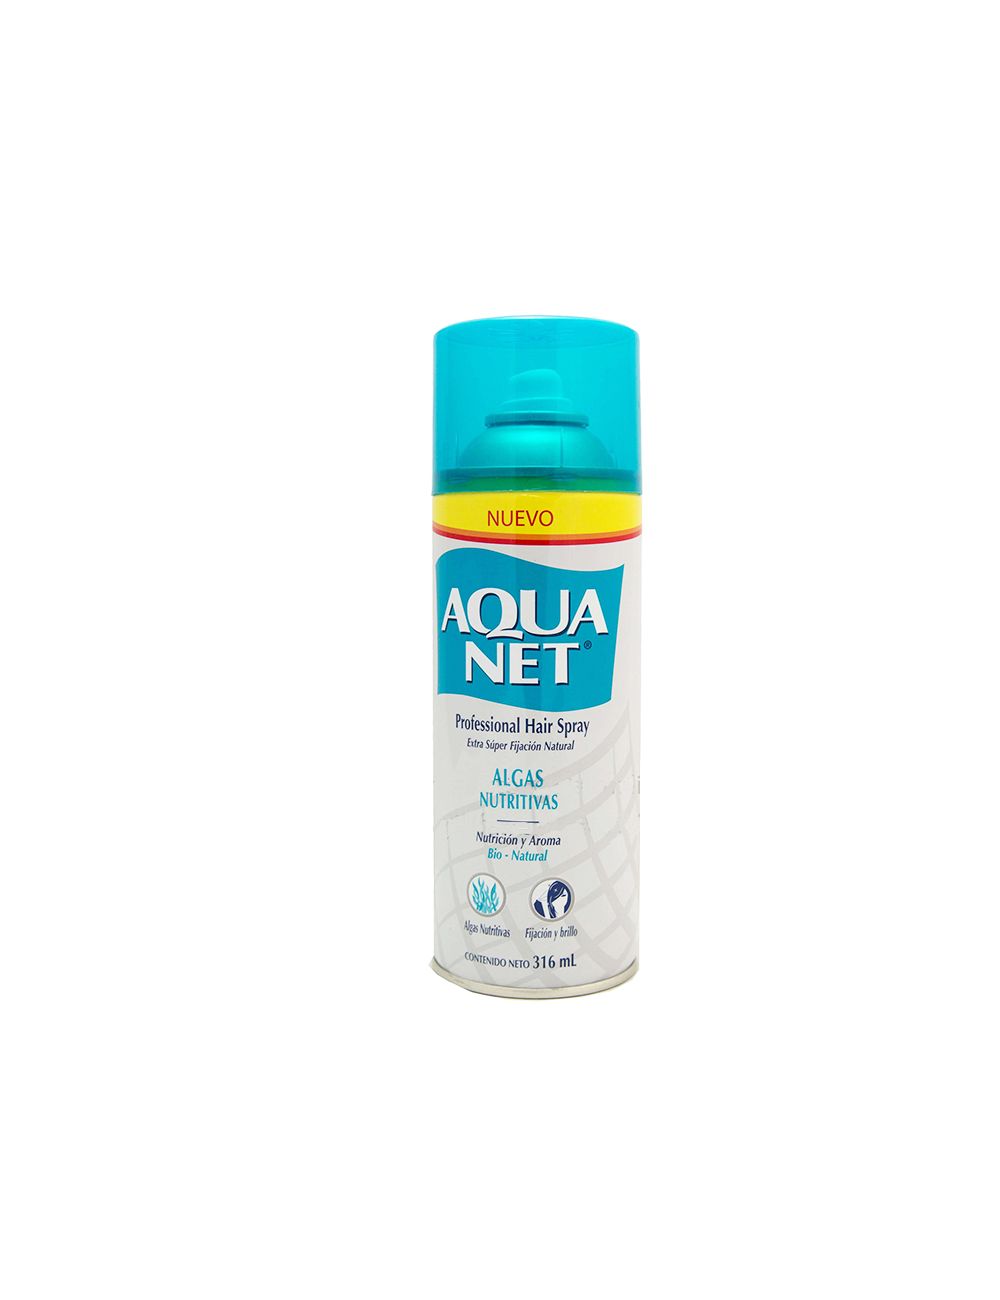 Aqua Net Professional Hair Spray Lata Aerosol Con 316 mL